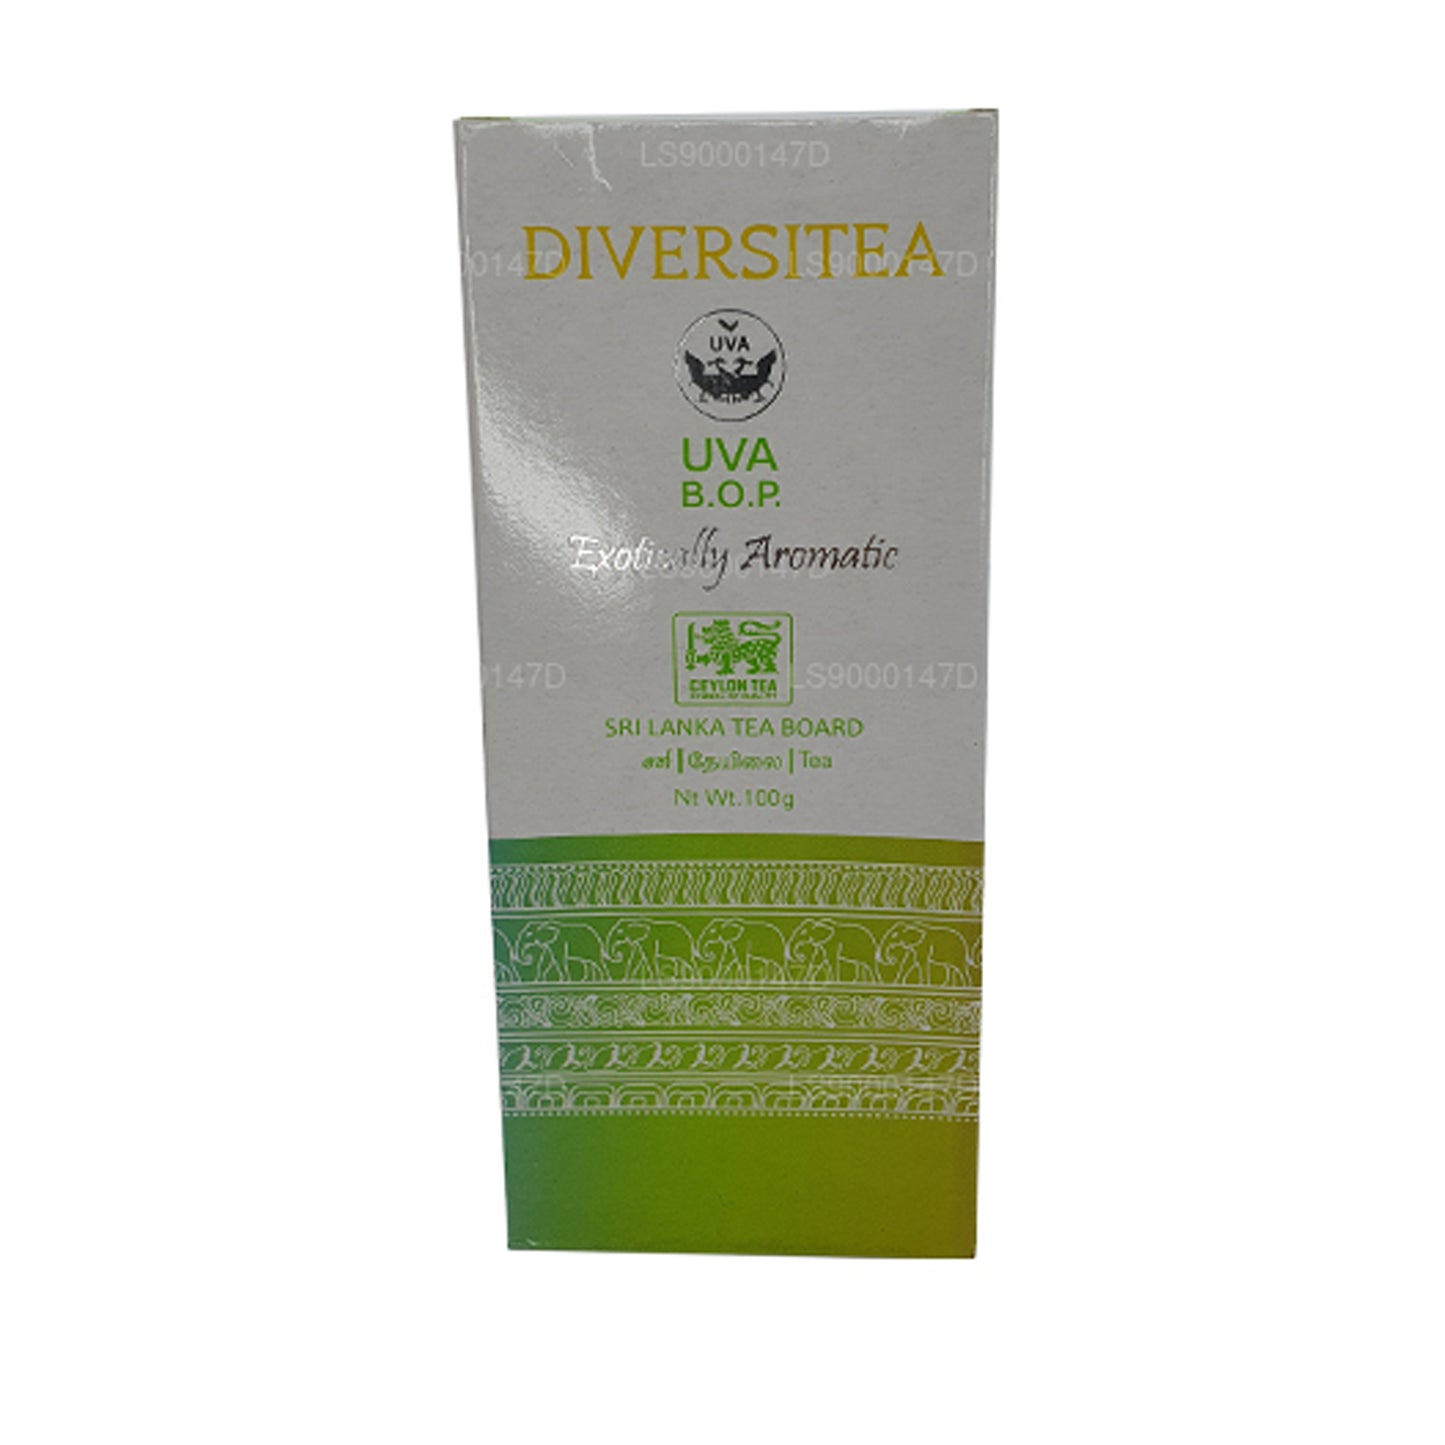 Lakpura Uva zwarte thee uit één regio